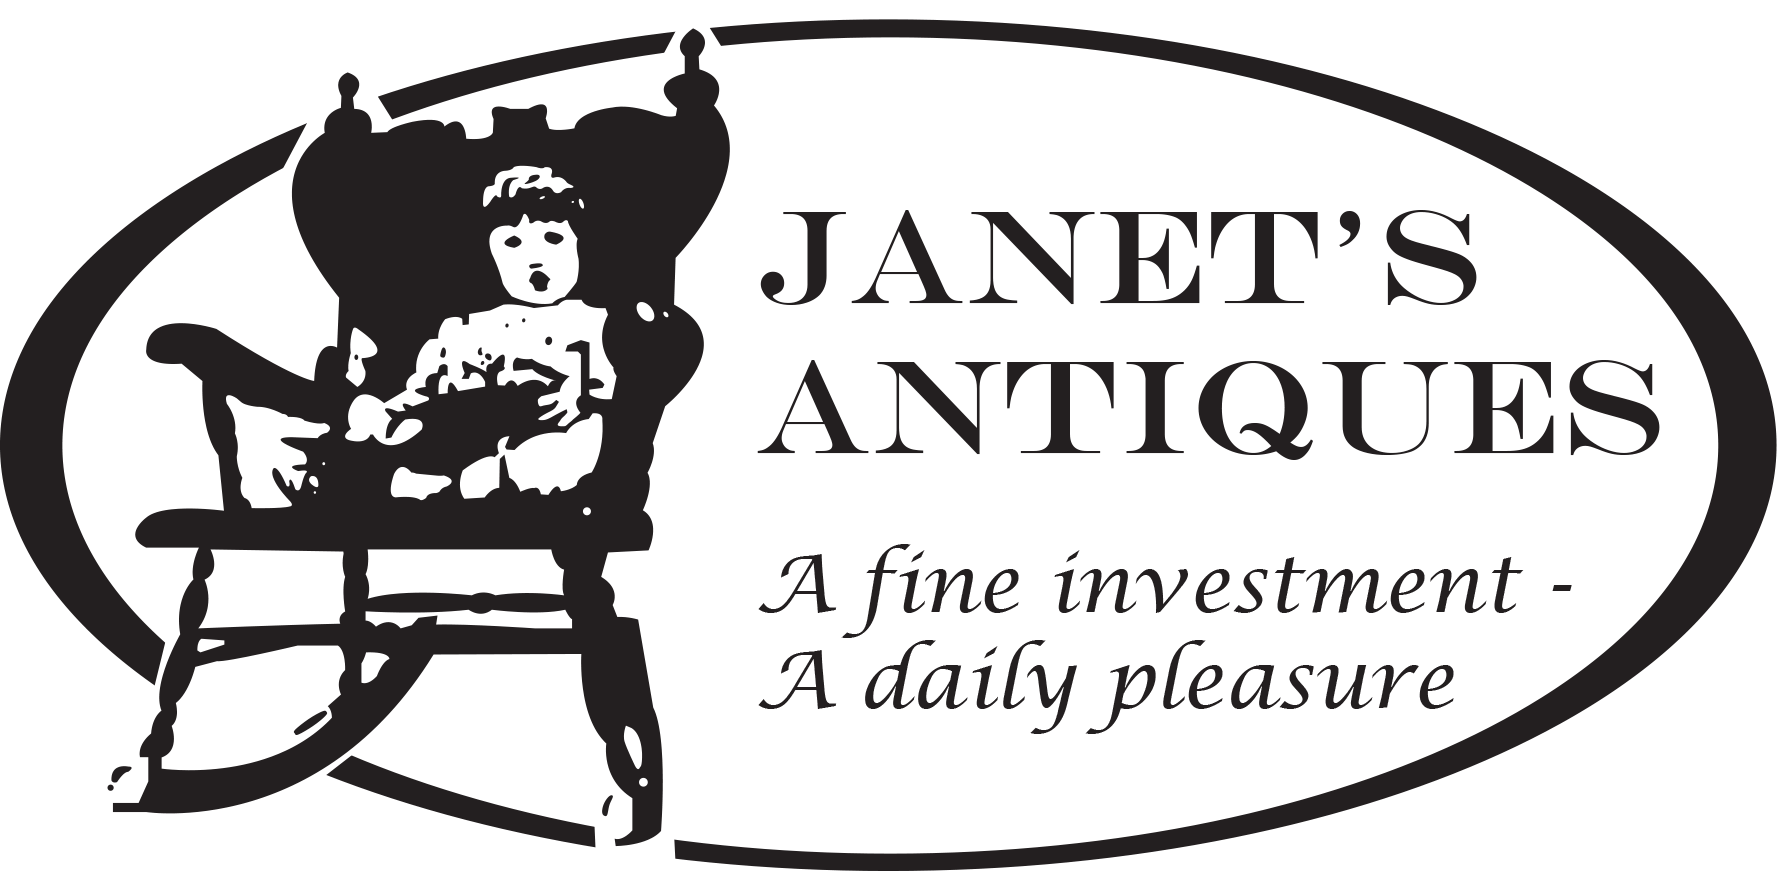 Janet's Antiques